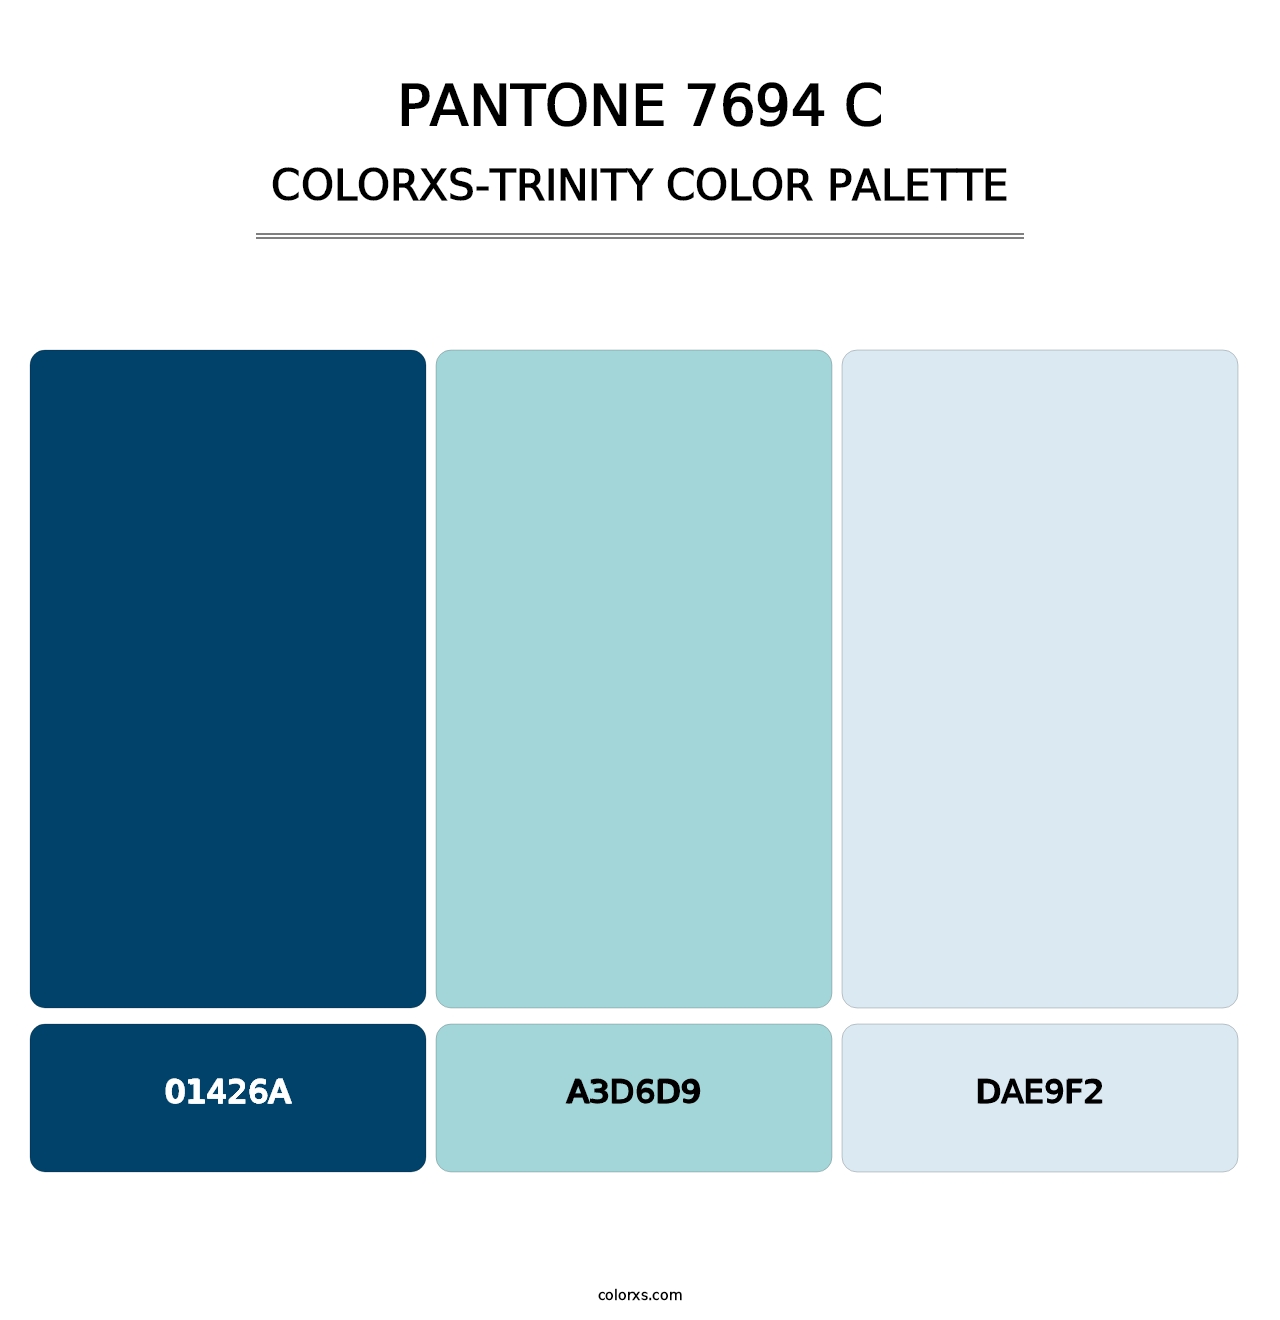 PANTONE 7694 C - Colorxs Trinity Palette